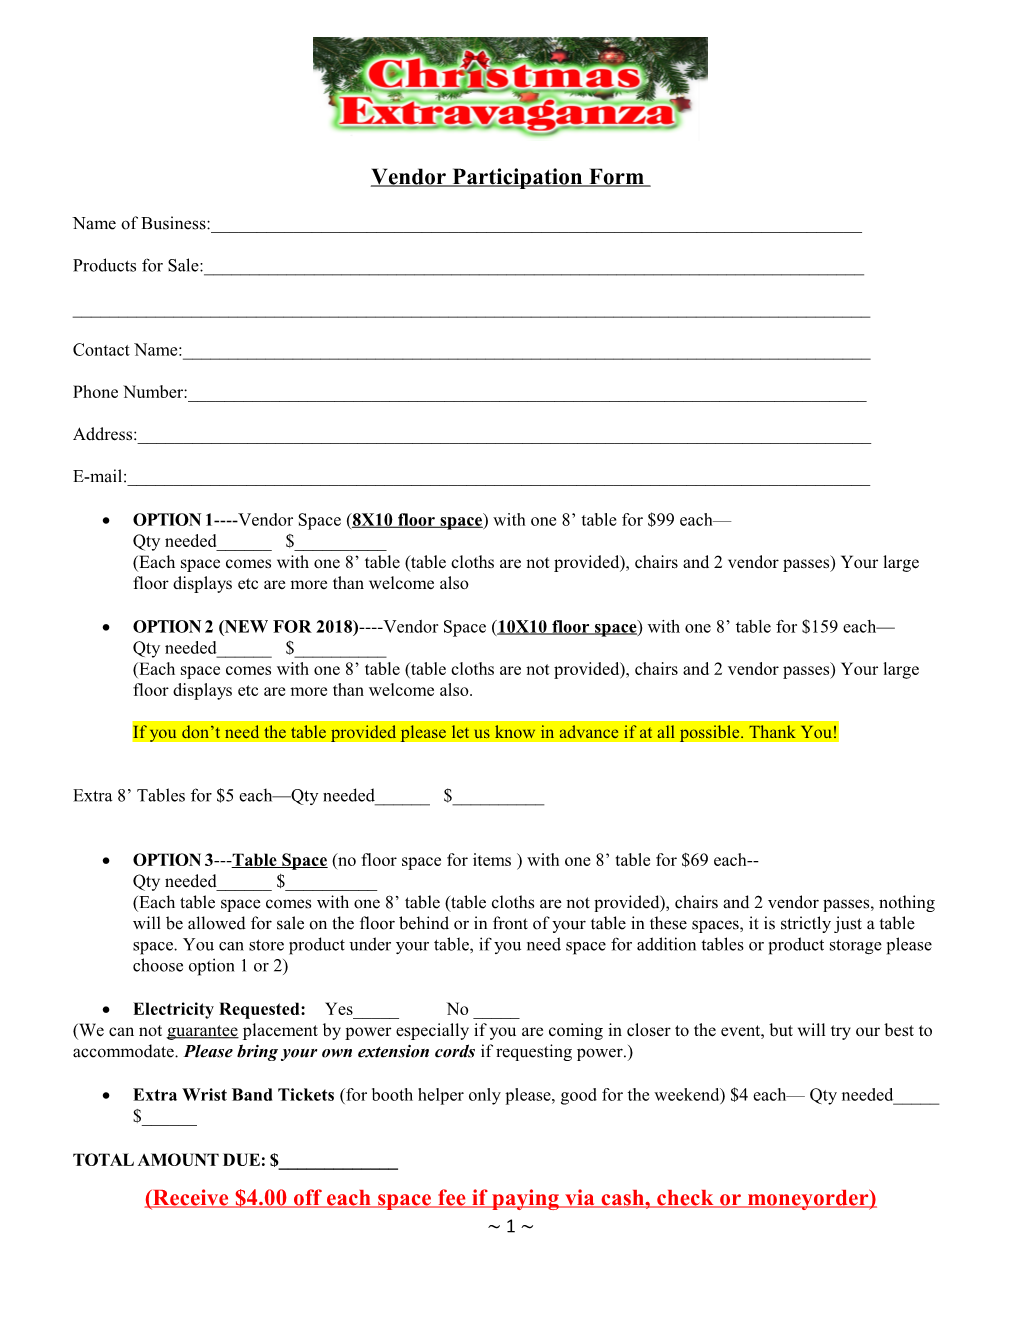 Vendor Participation Form